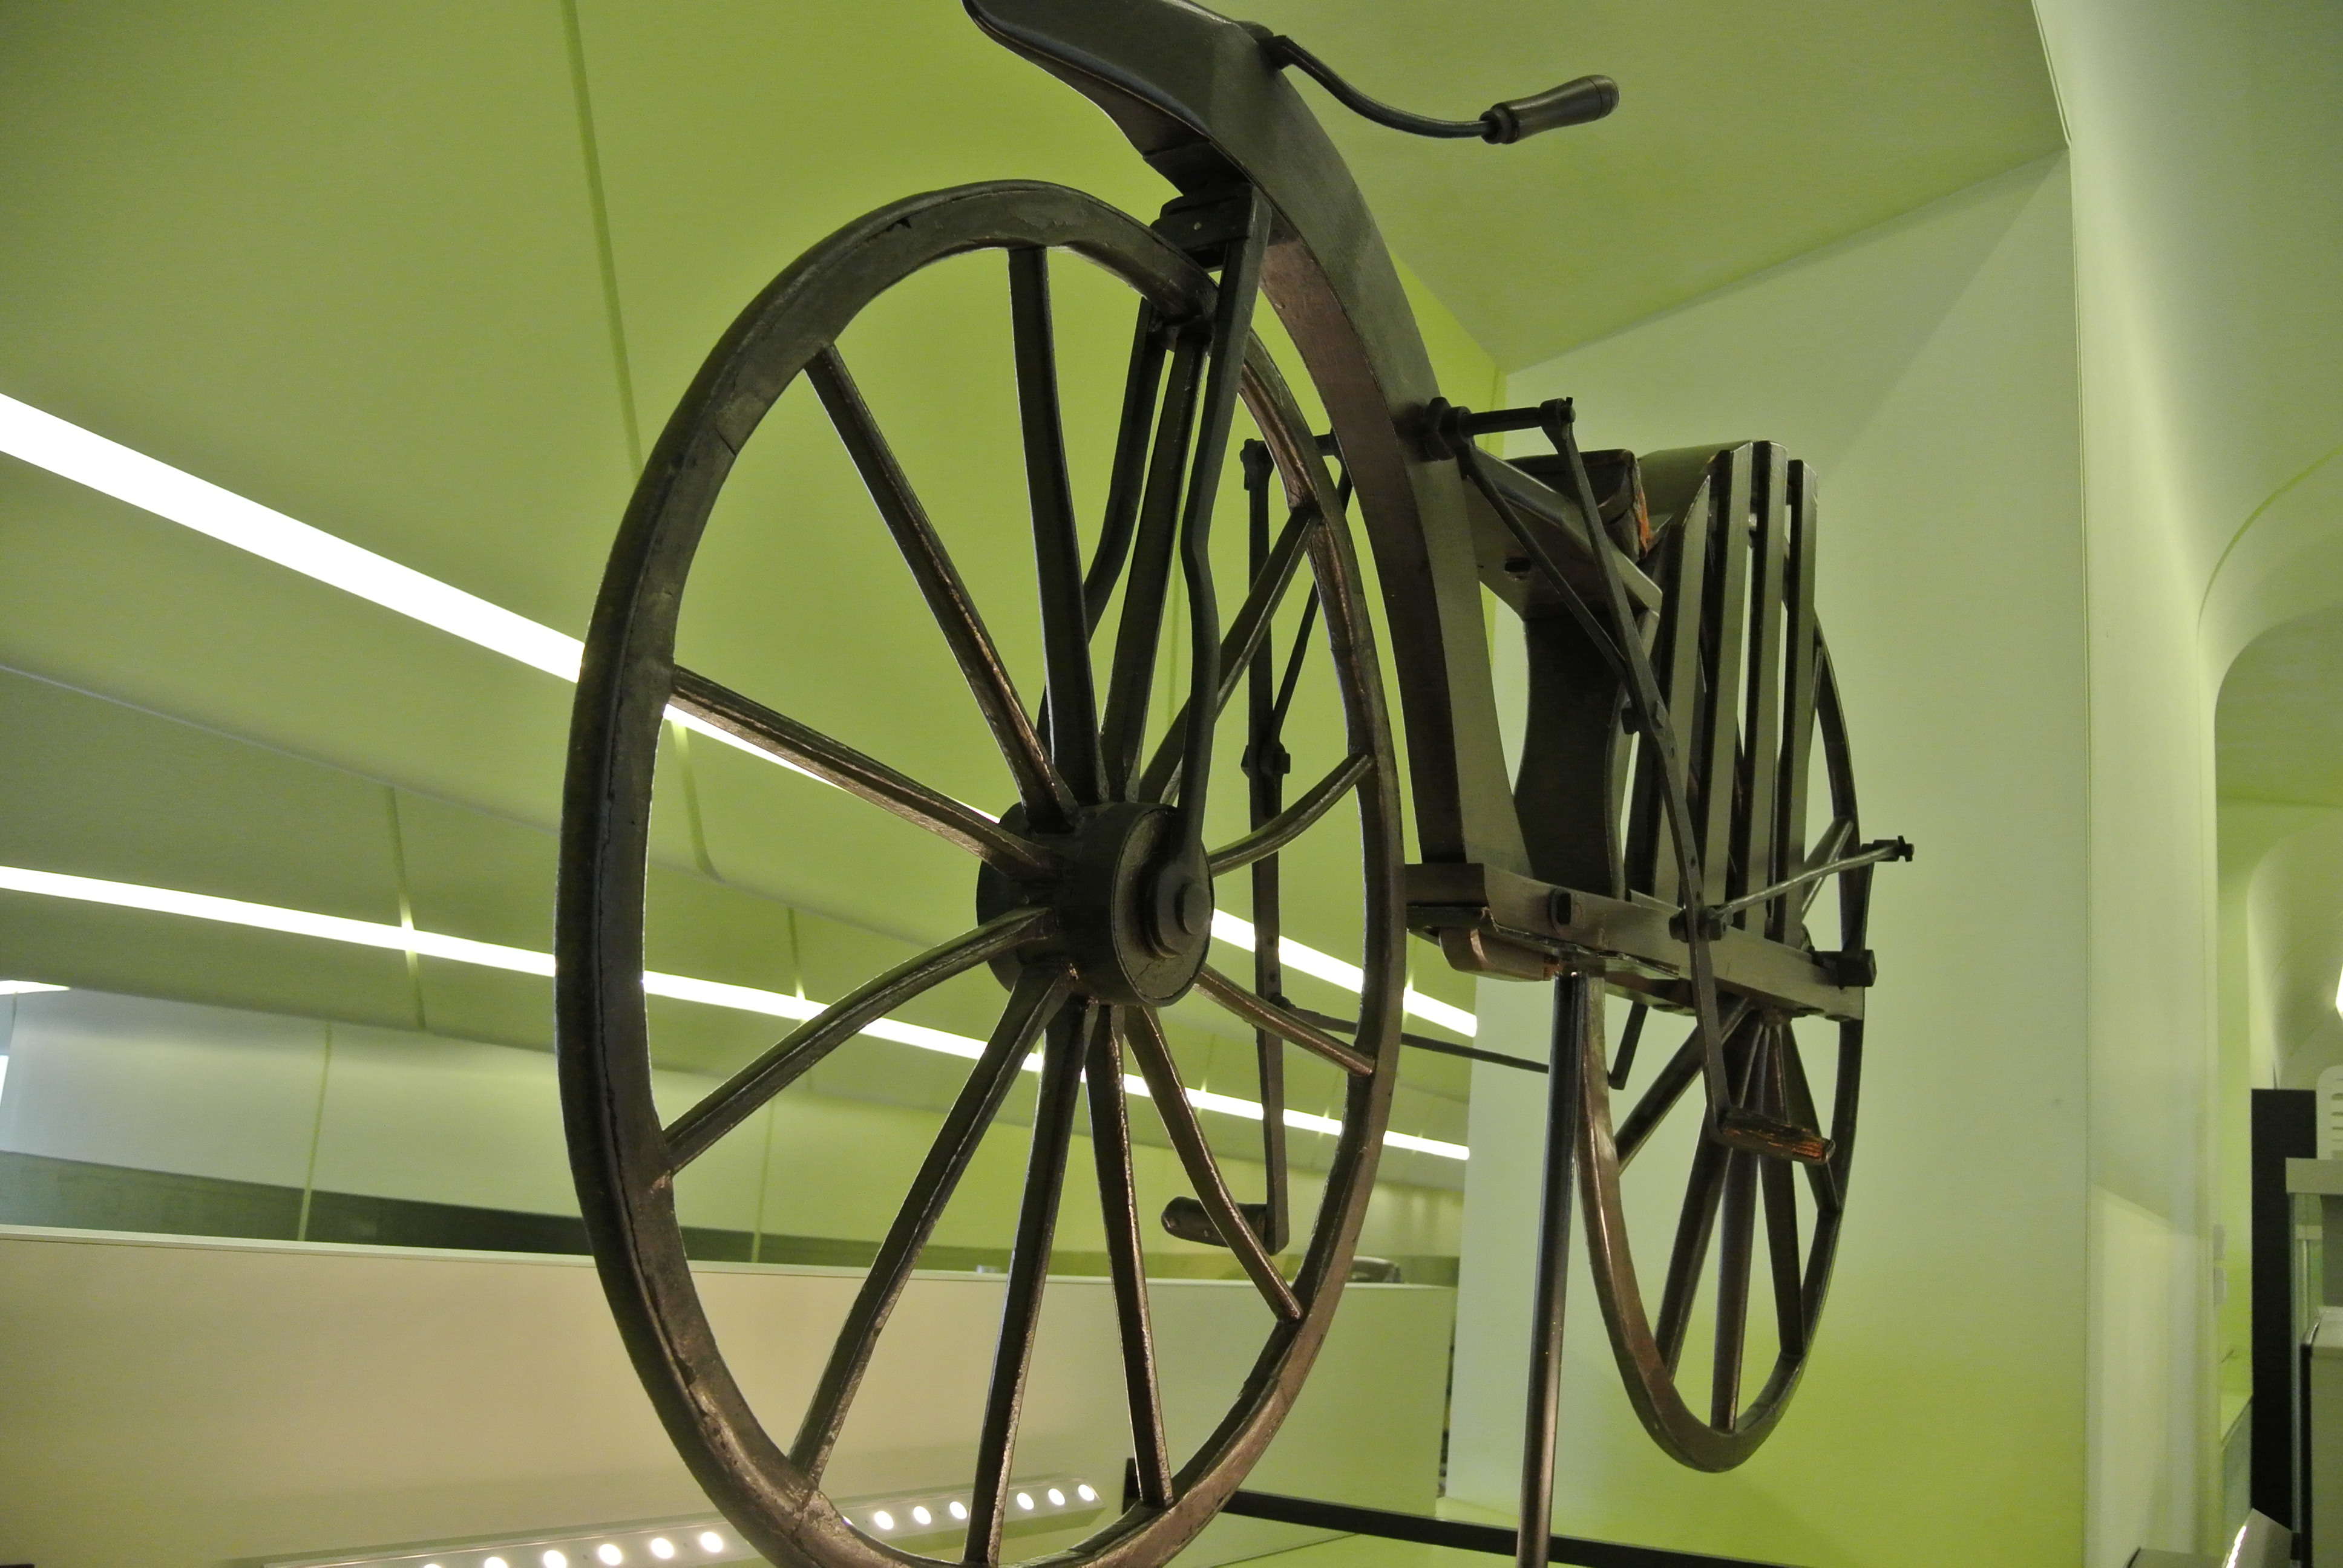 Esimene jalgratas